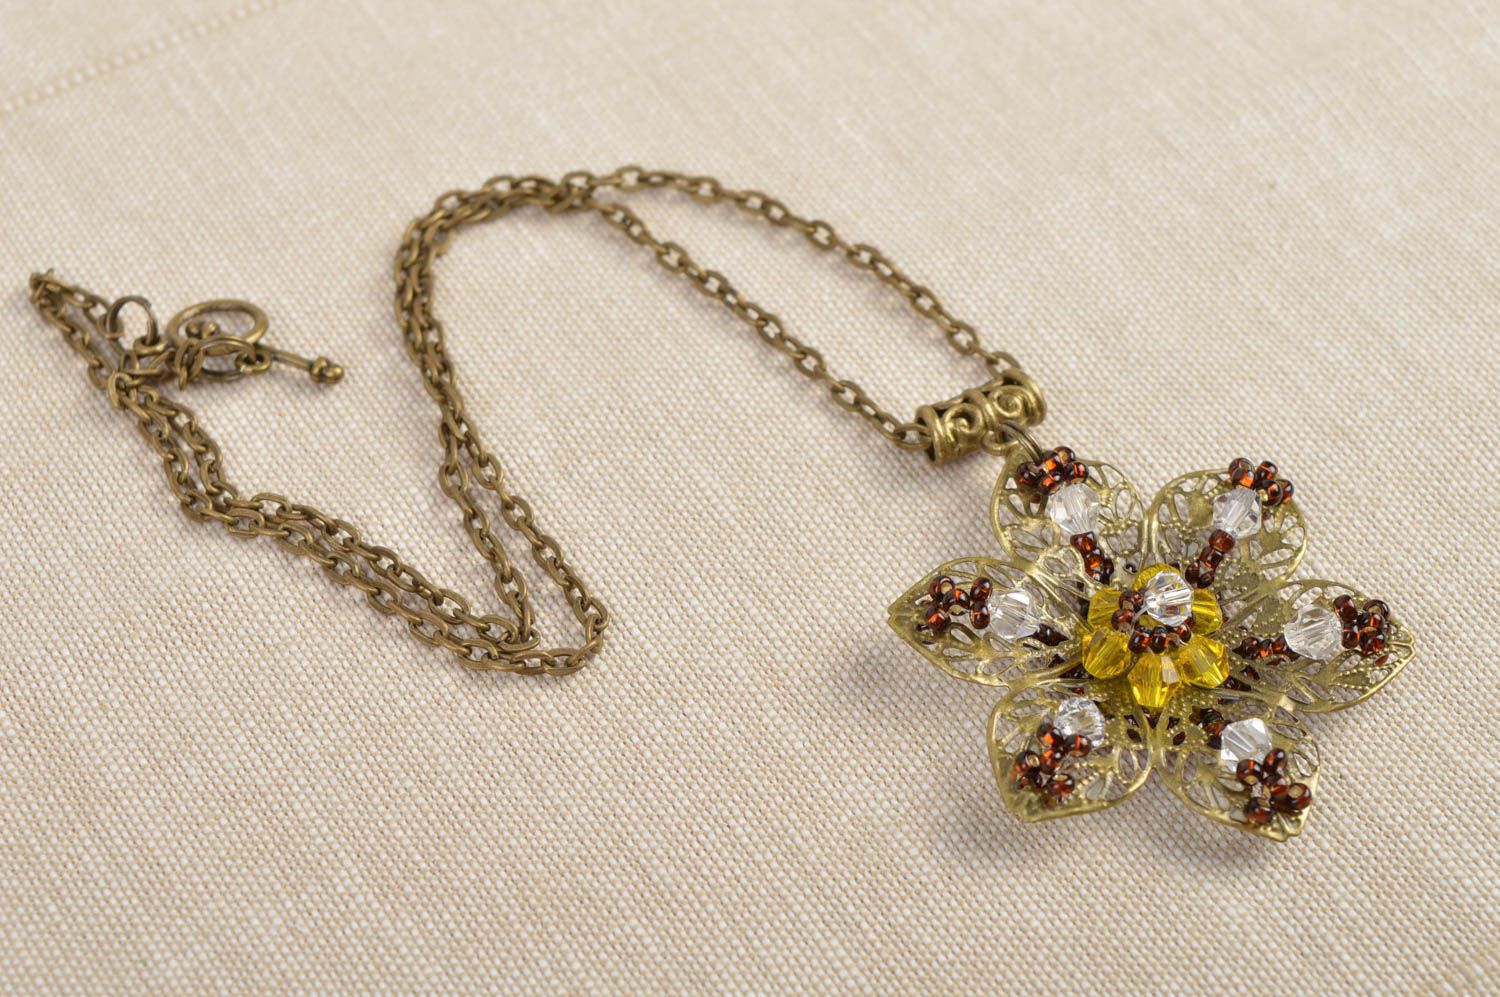 Handmade necklace pendant vintage designer bijouterie accessory for woman photo 1